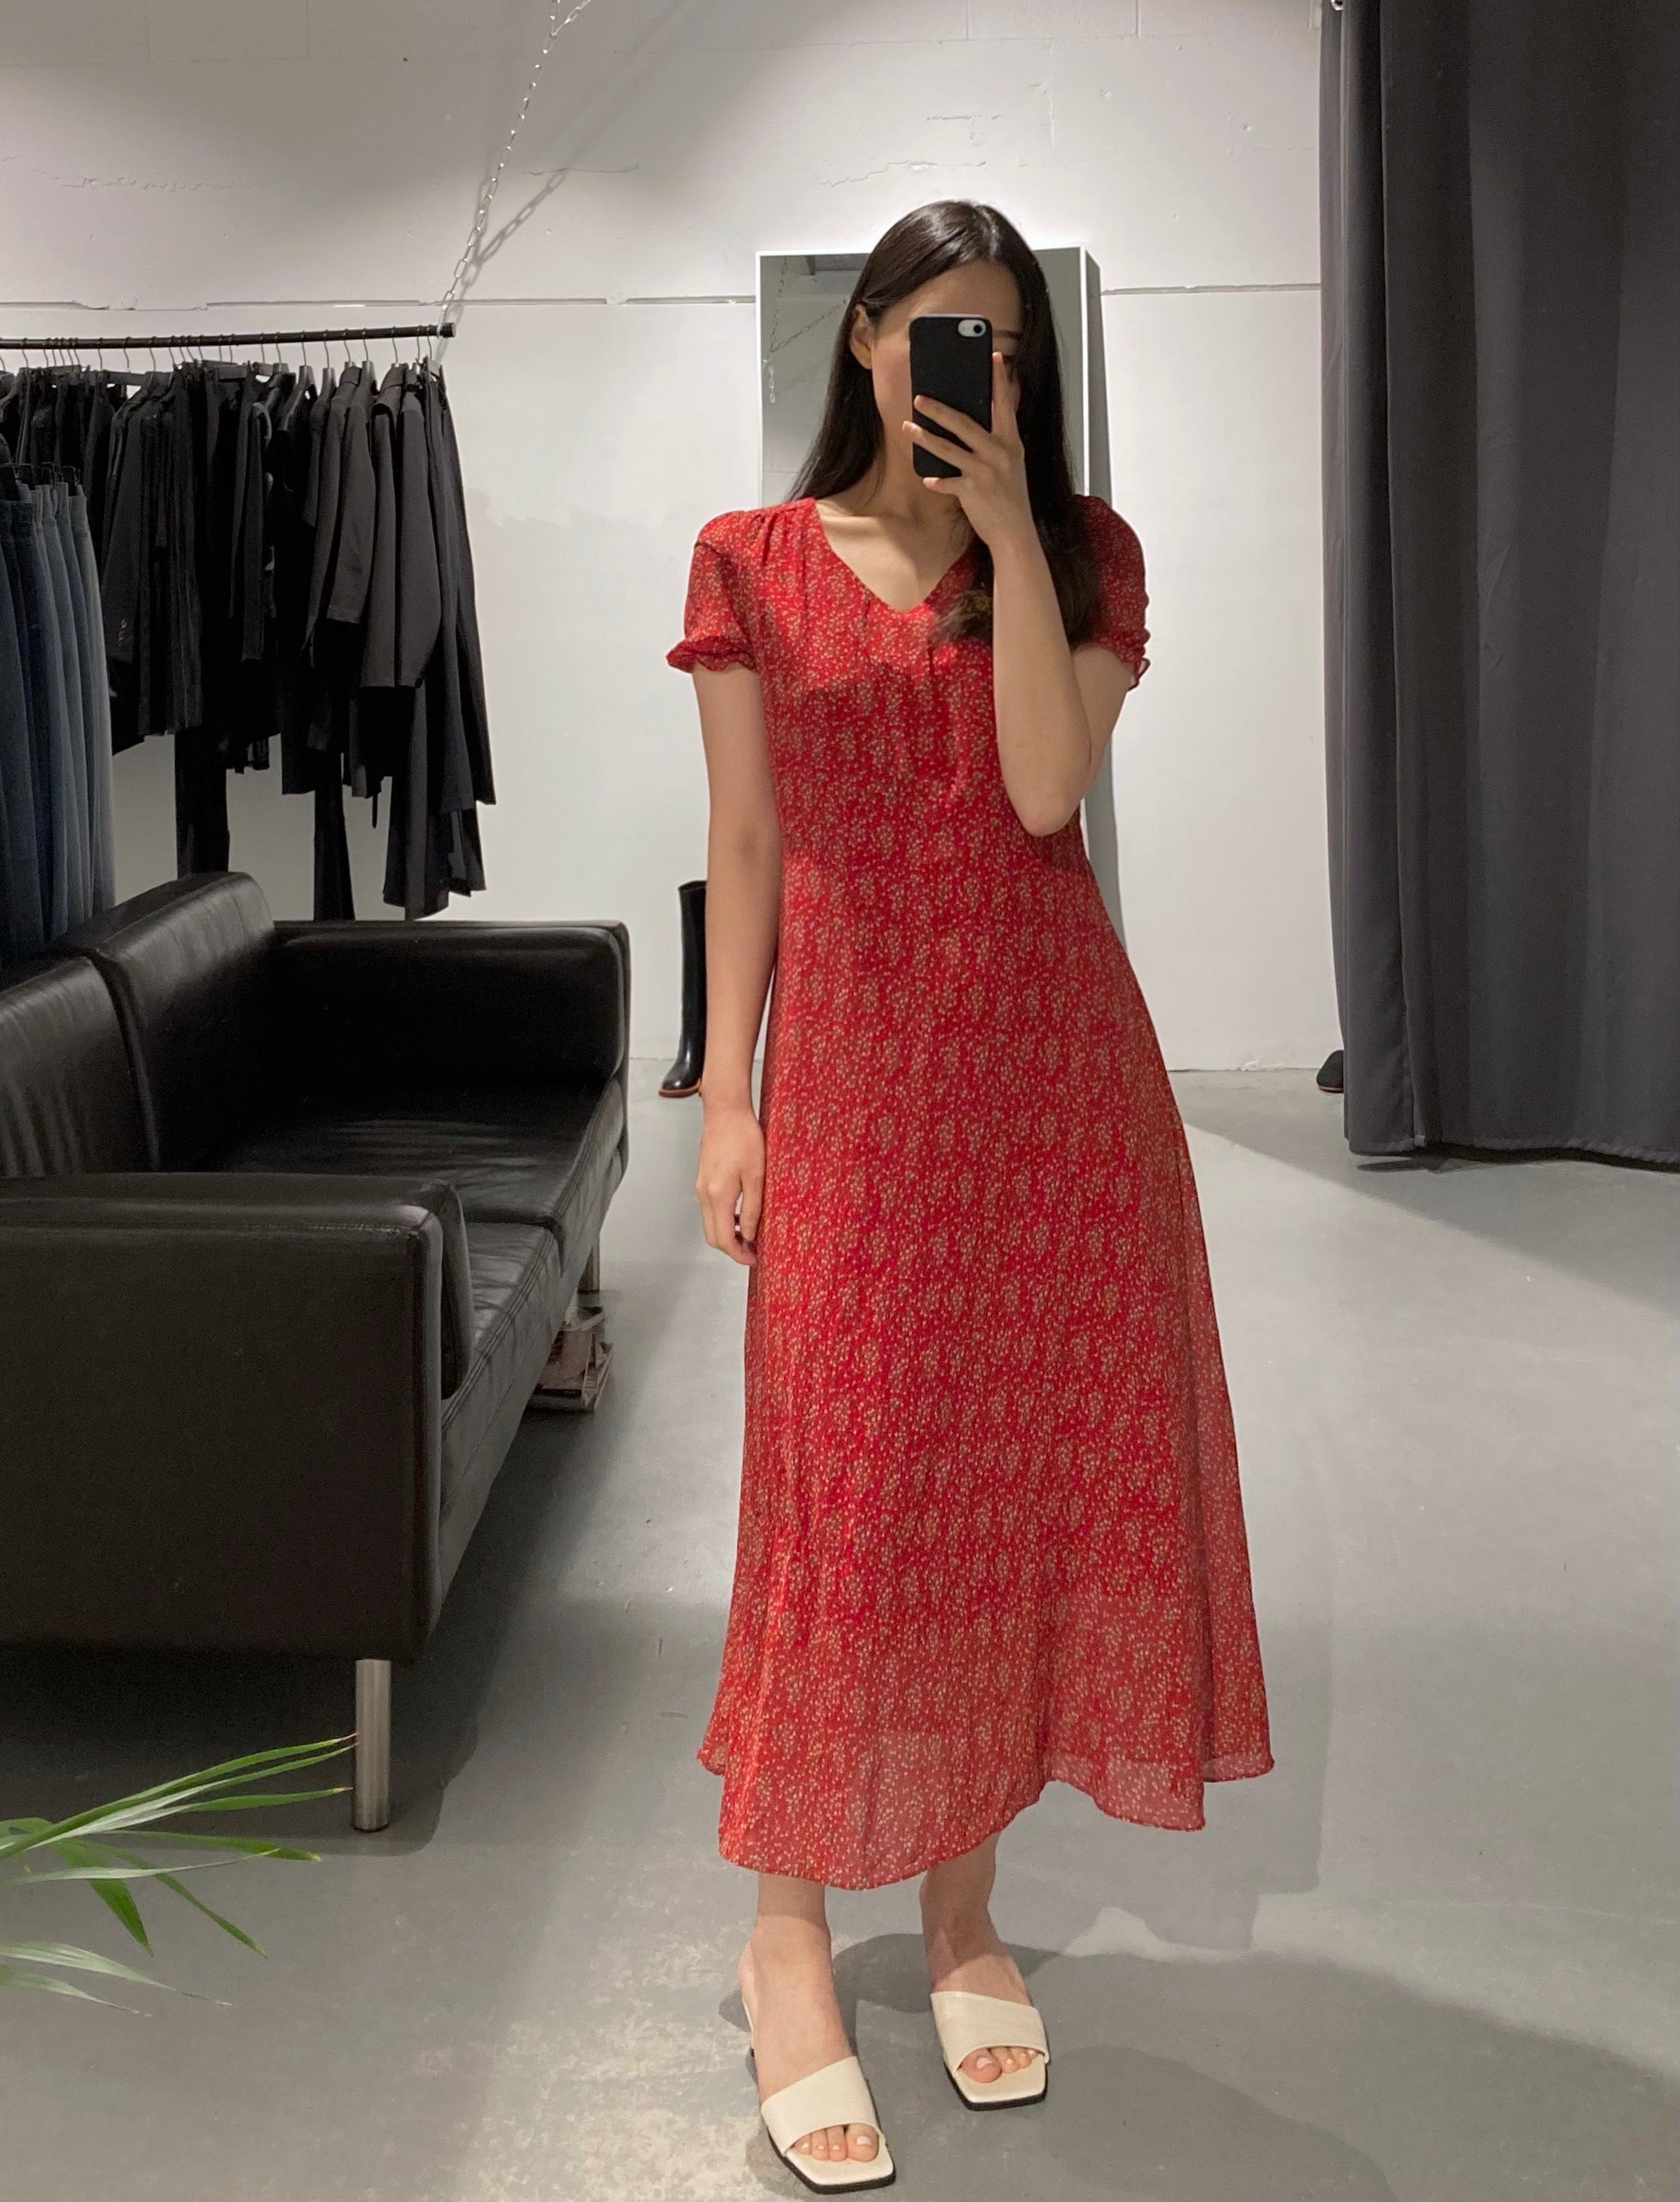 IU Floral Red Dress